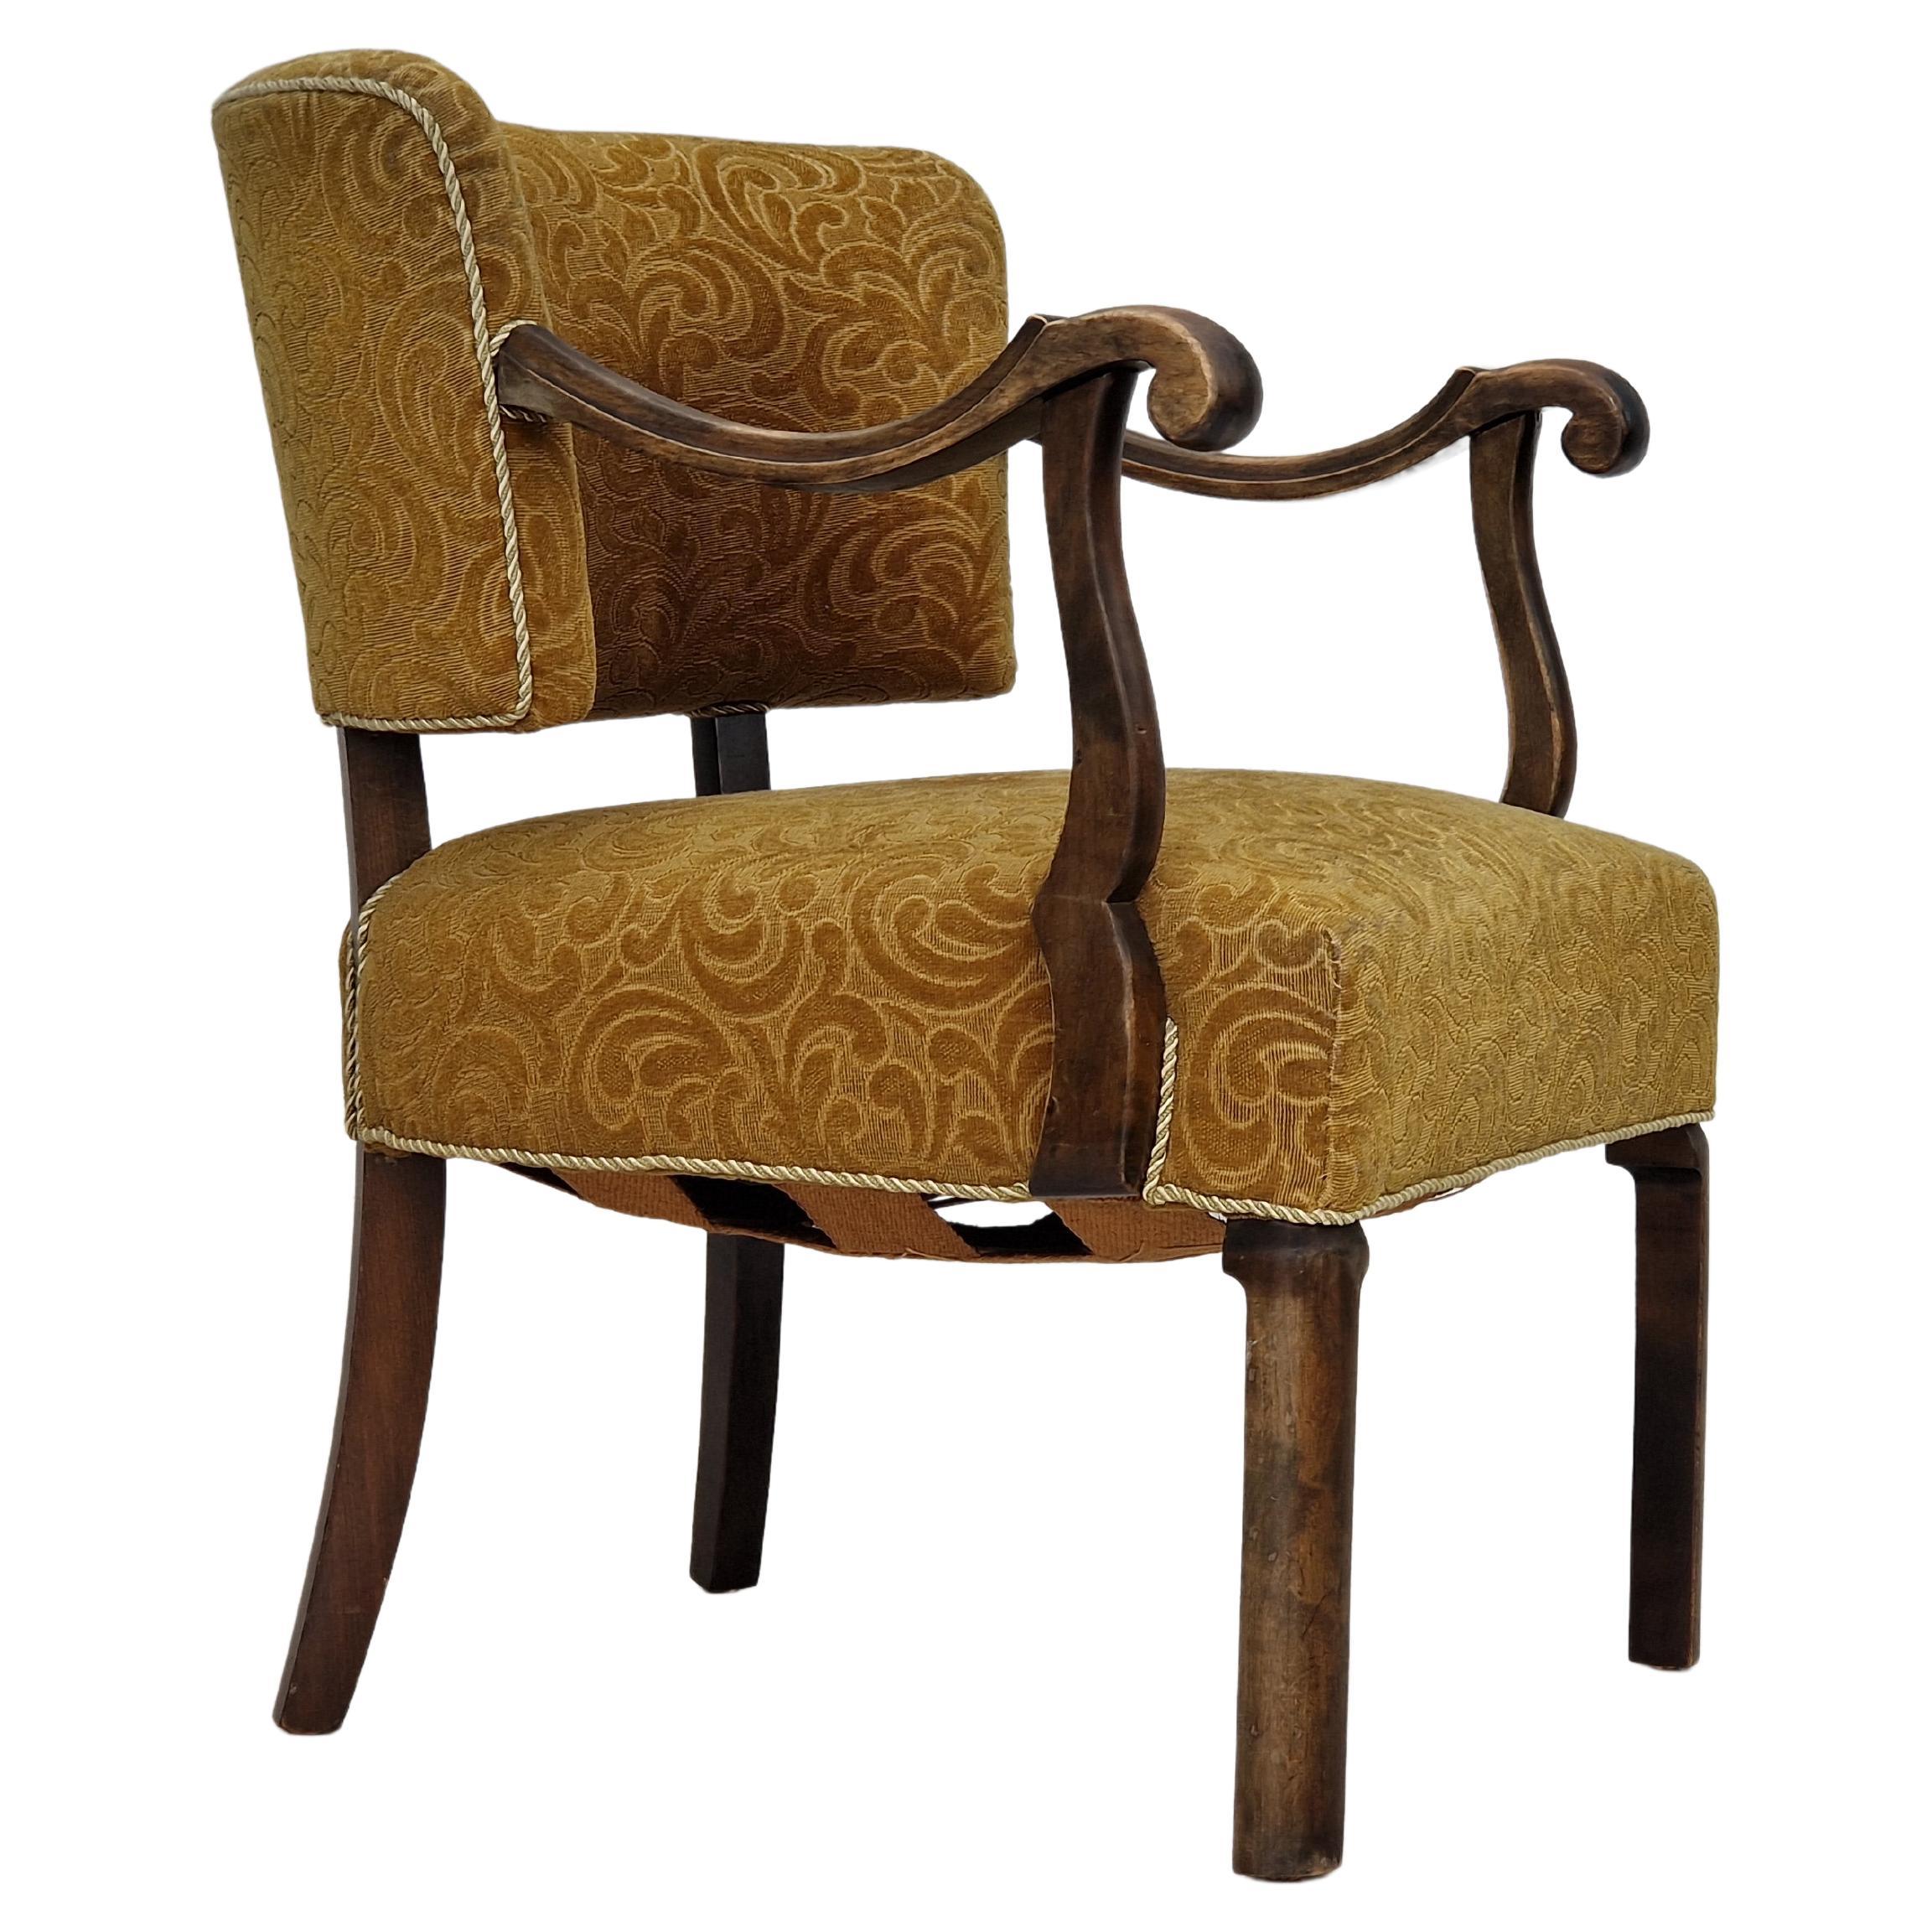 1930s, Scandinavian design, armchair in green furniture fabric, ash wood.